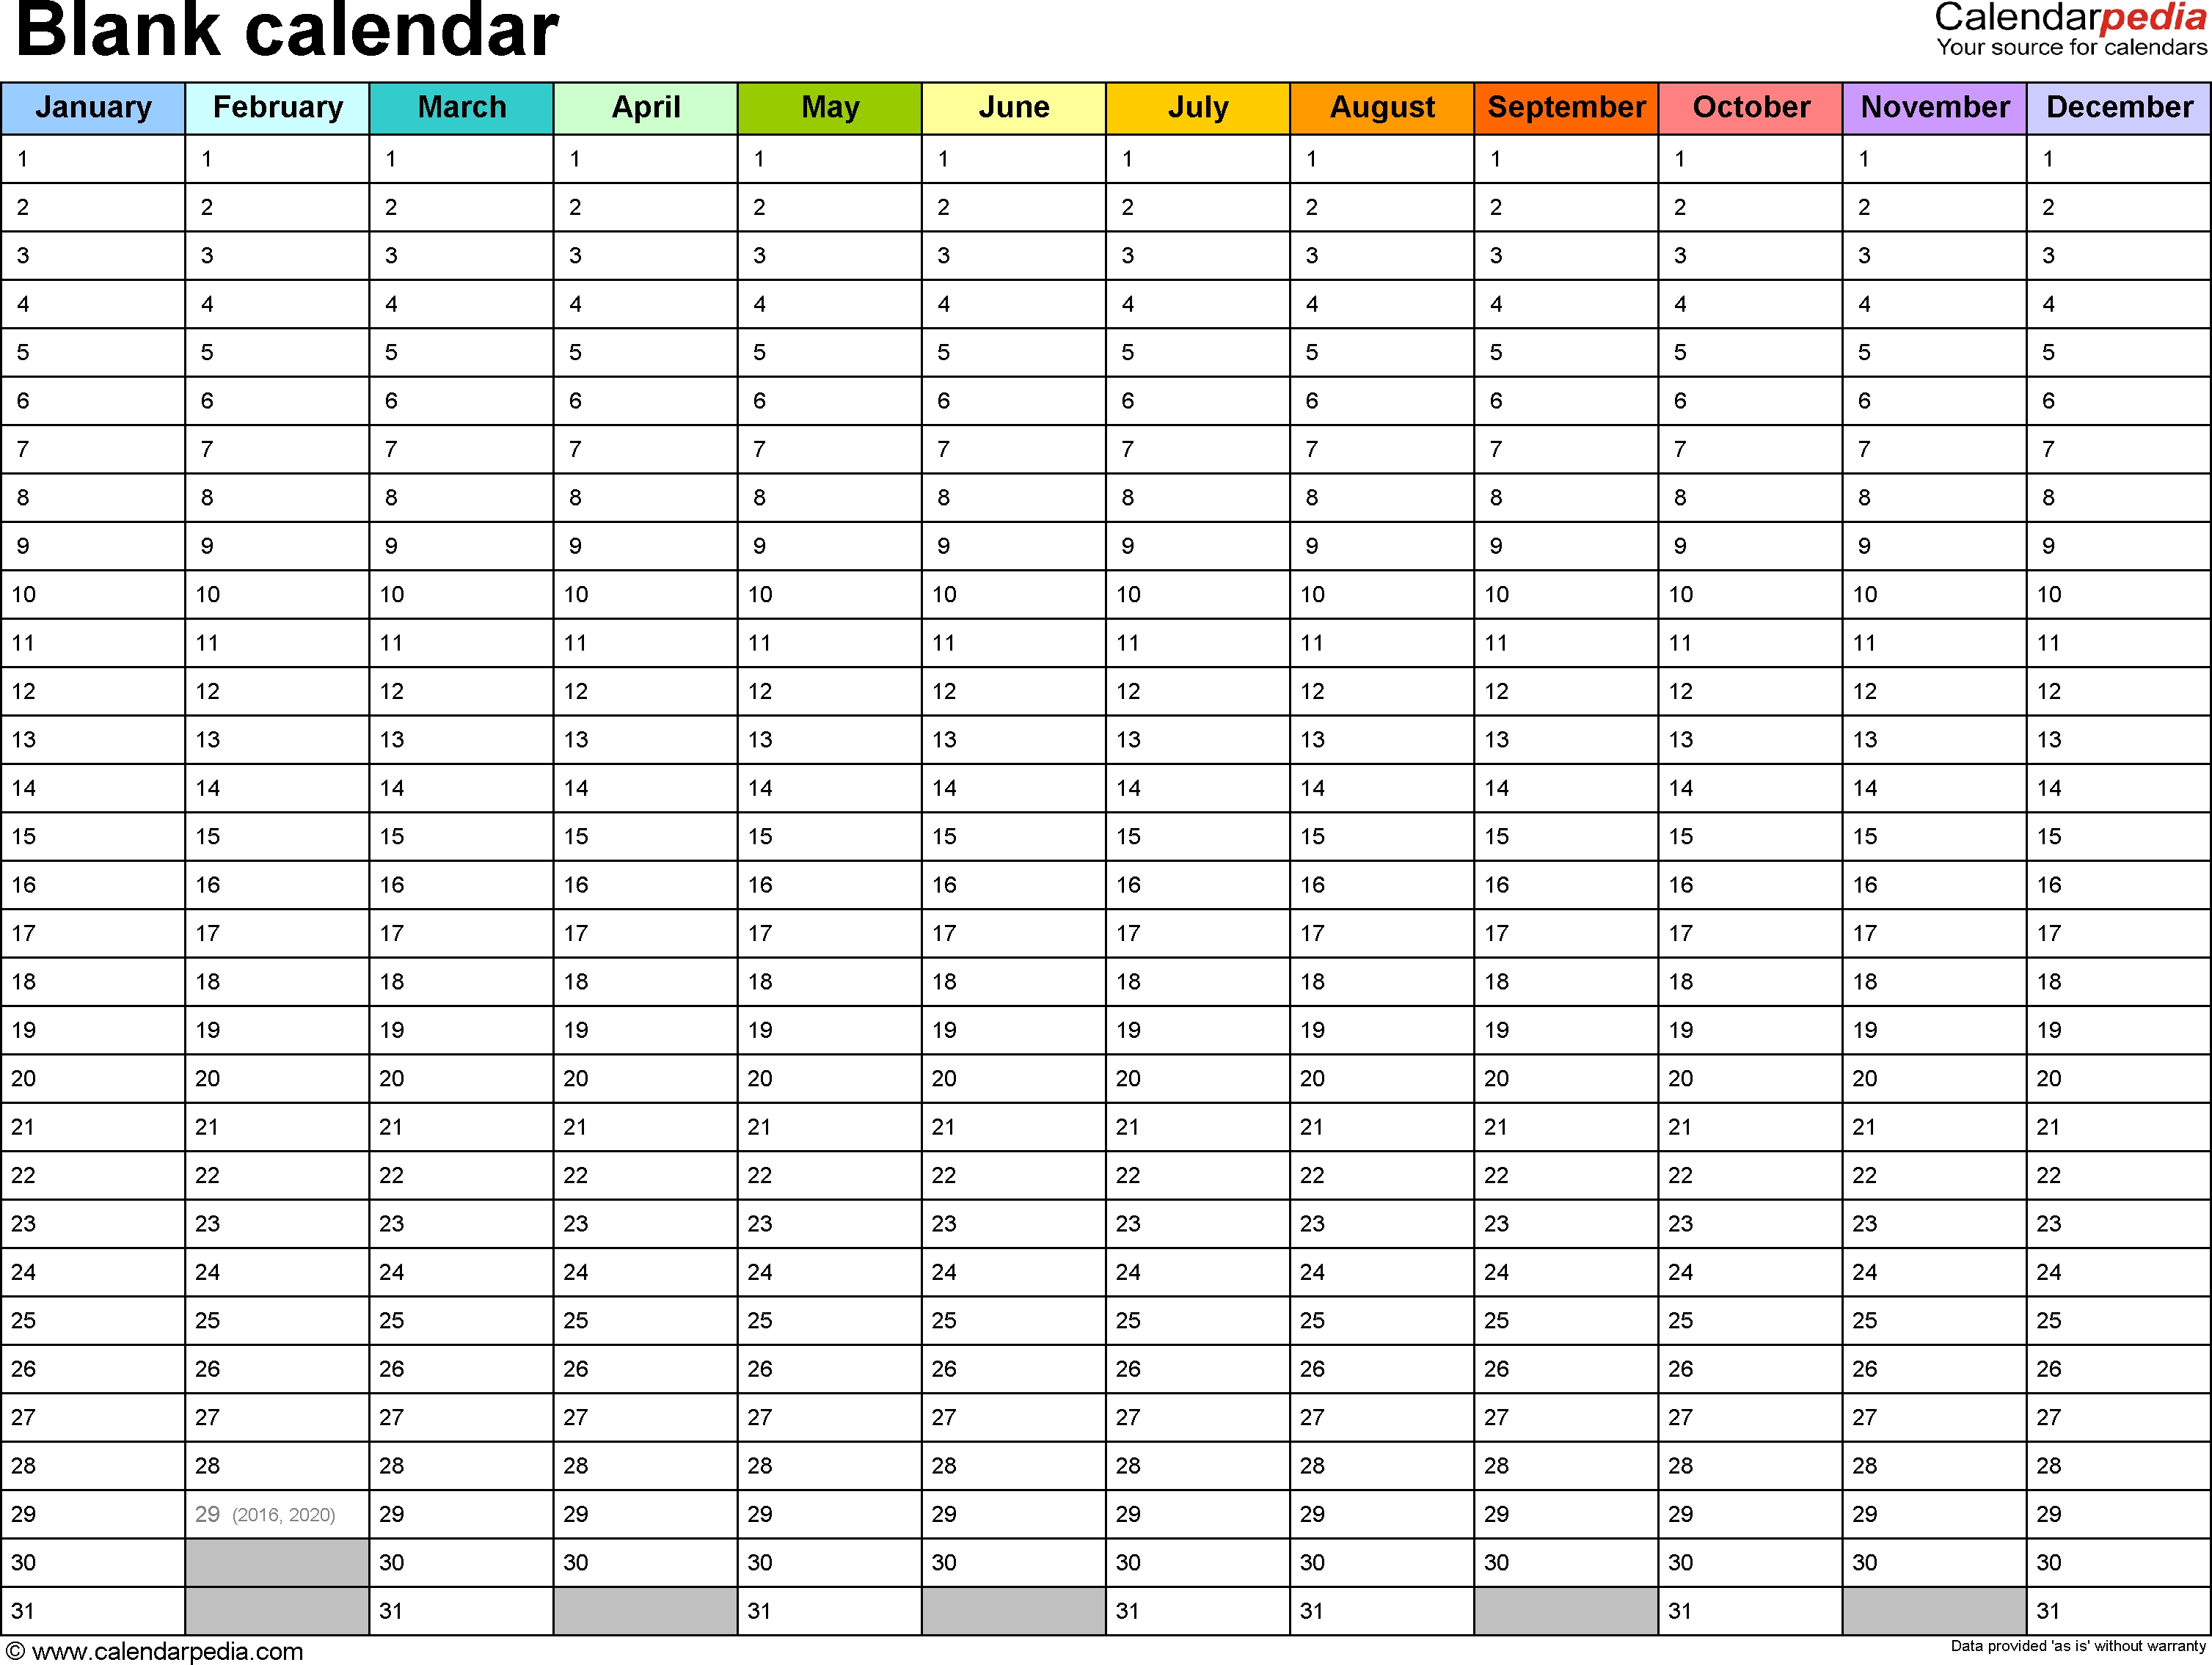 Blank Calendar - 9 Free Printable Microsoft Word Templates regarding Free 3 Month Calendar Templates